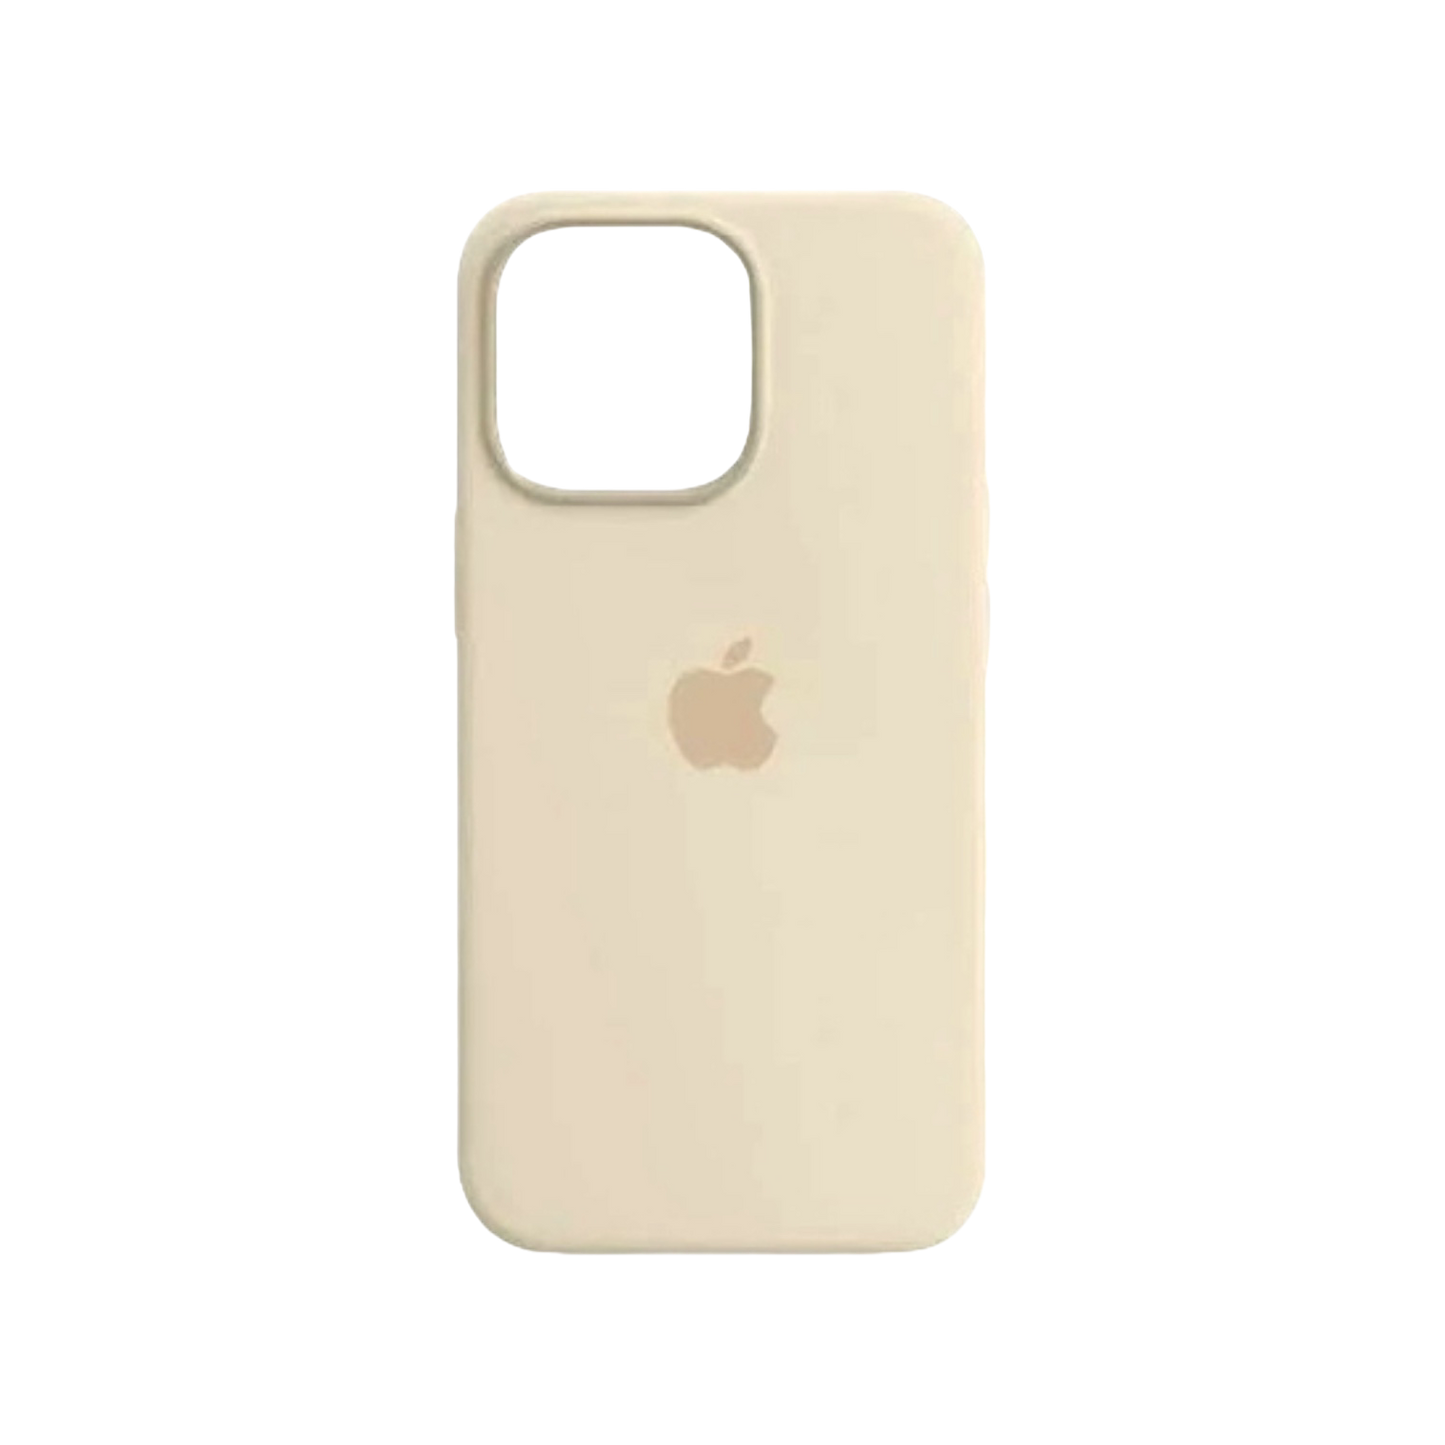 Carcasa de Silicona Premium para iPhone 12 Series